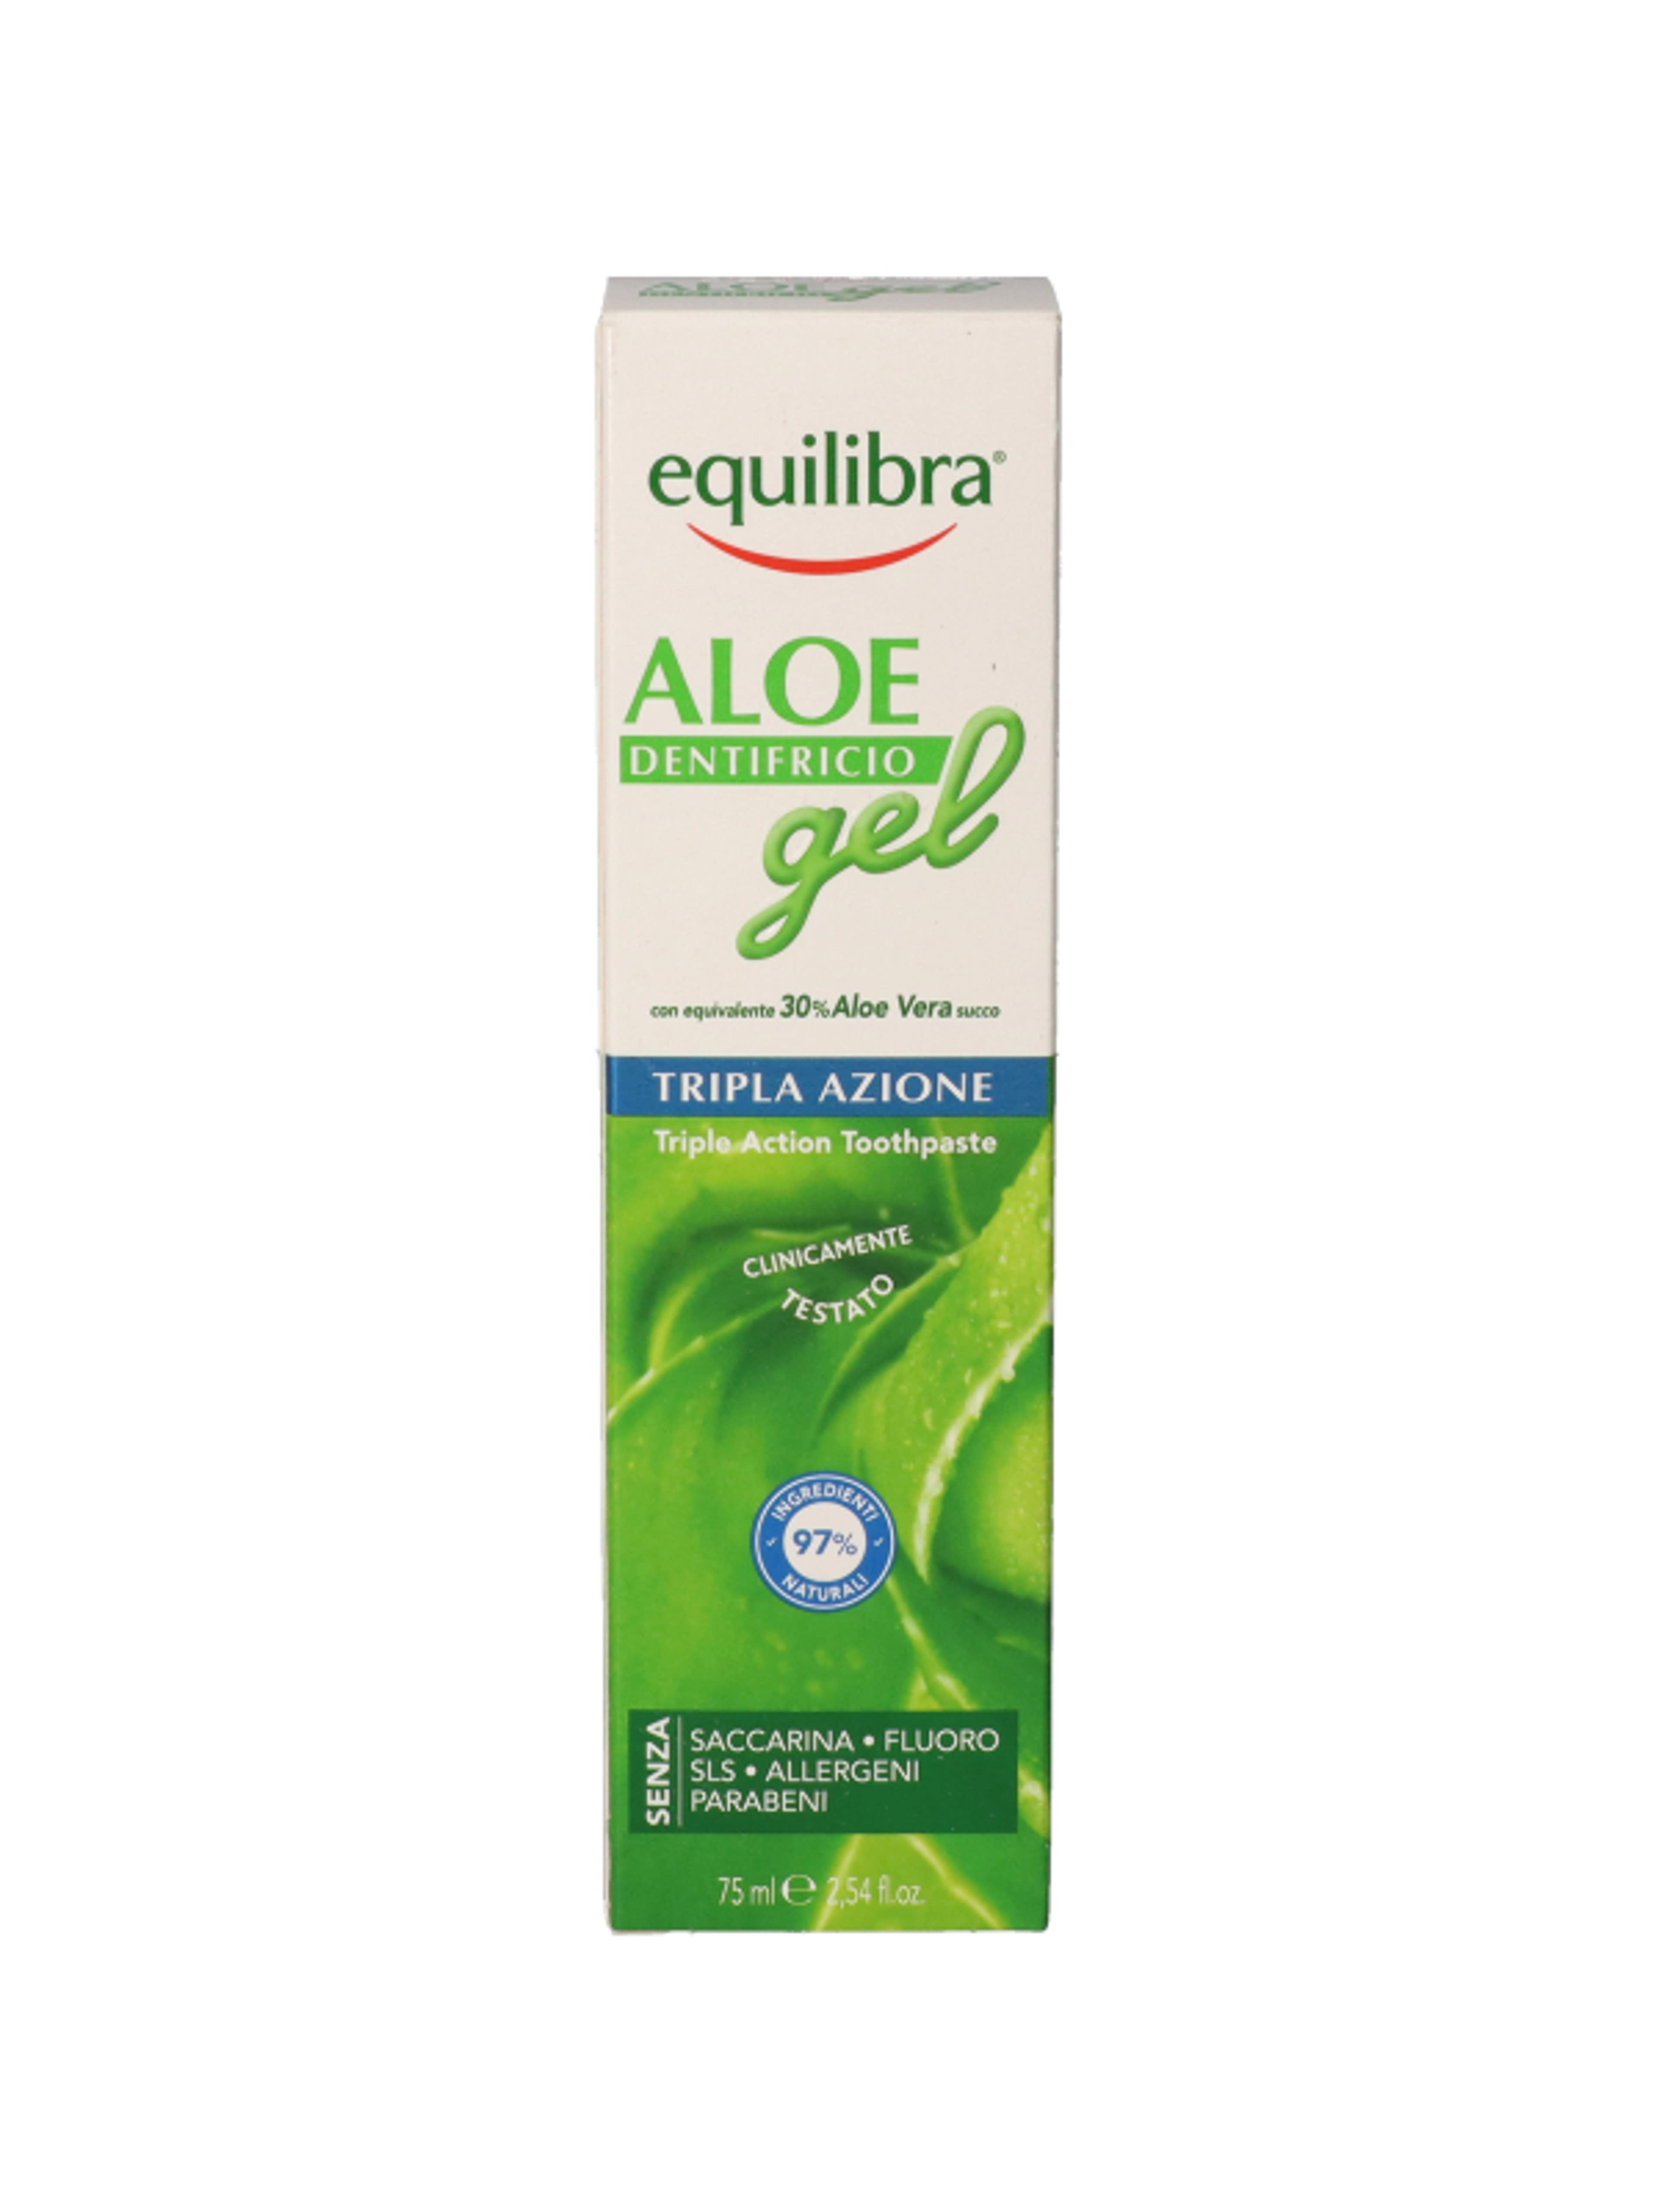 Equilibra Aloe Gel fogkrém - 75 ml-1